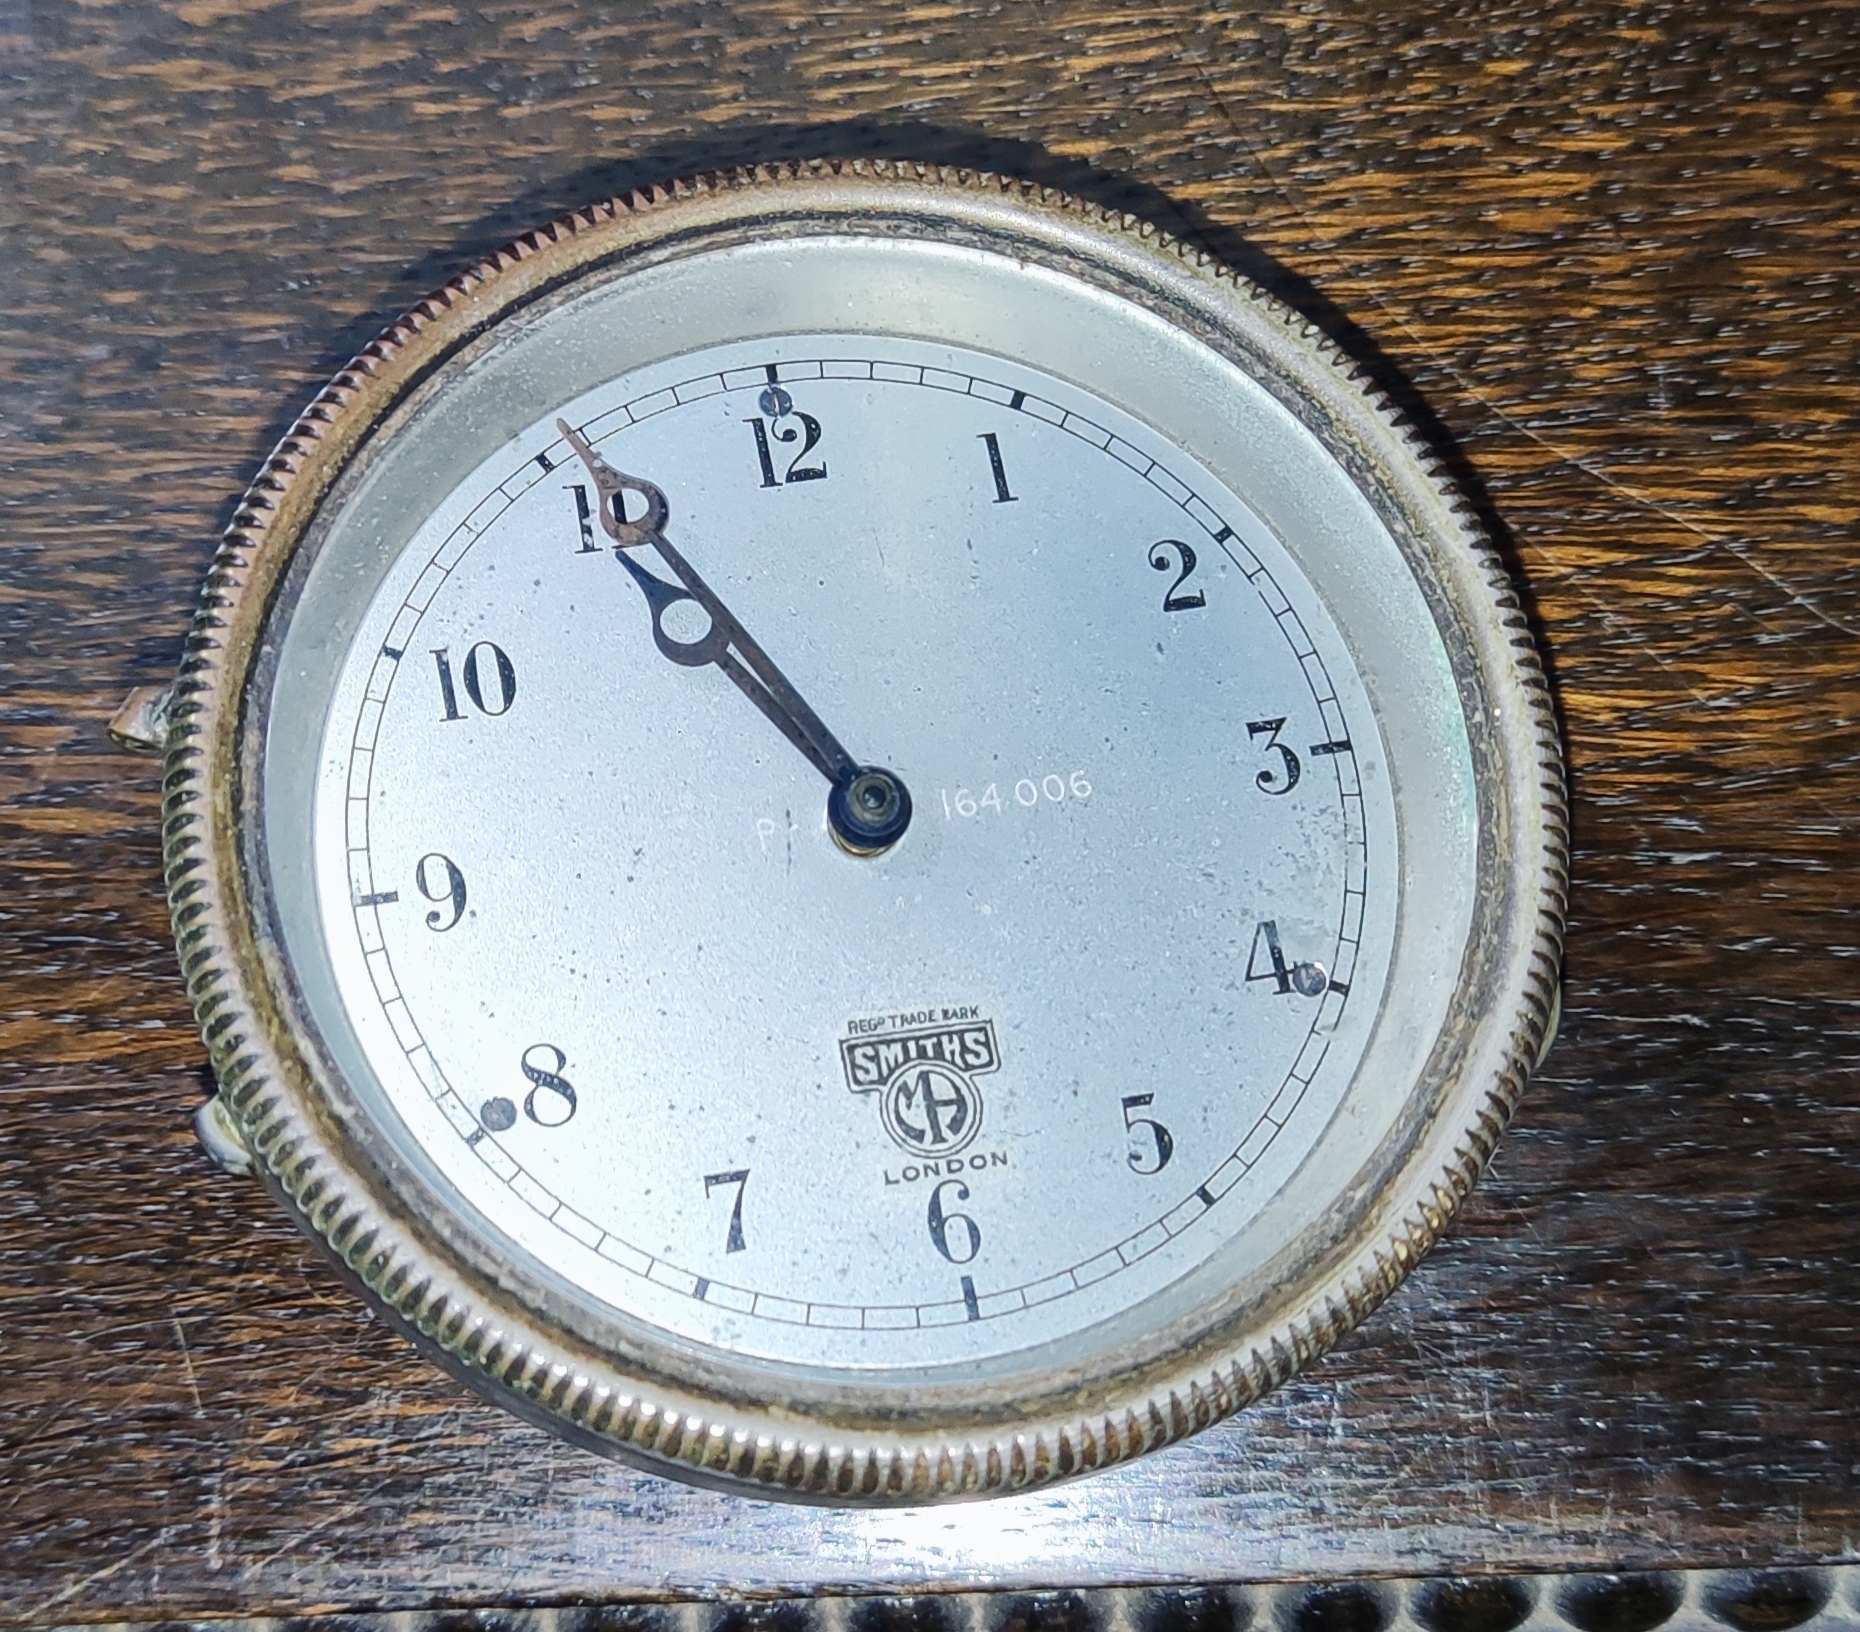 A SMITHS dashboard car clock